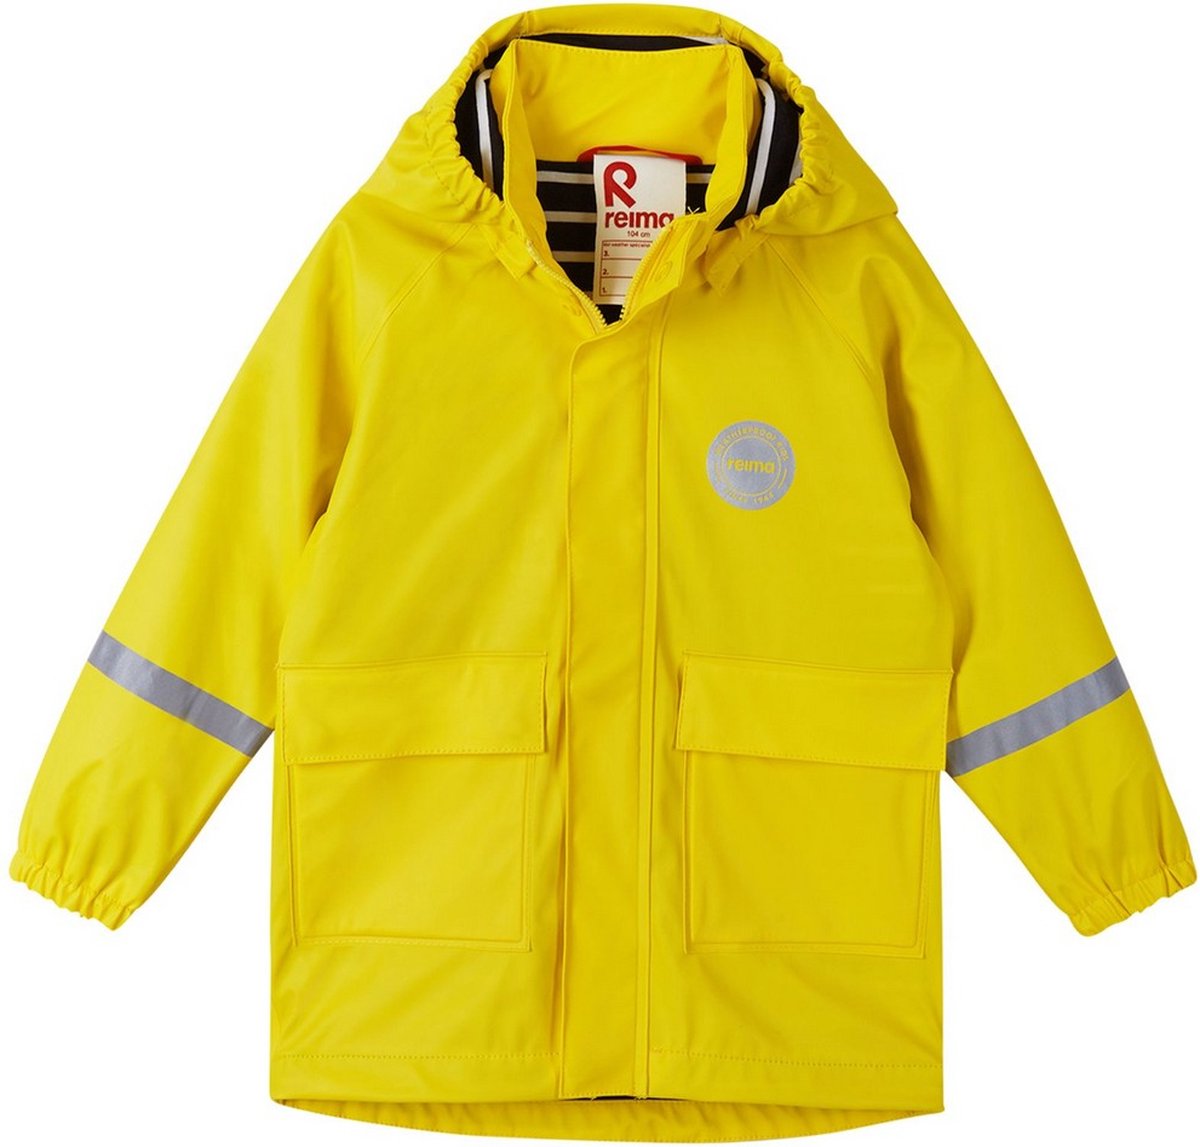 Reima - Raincoat for children - Pisaroi - Yellow - maat 116cm